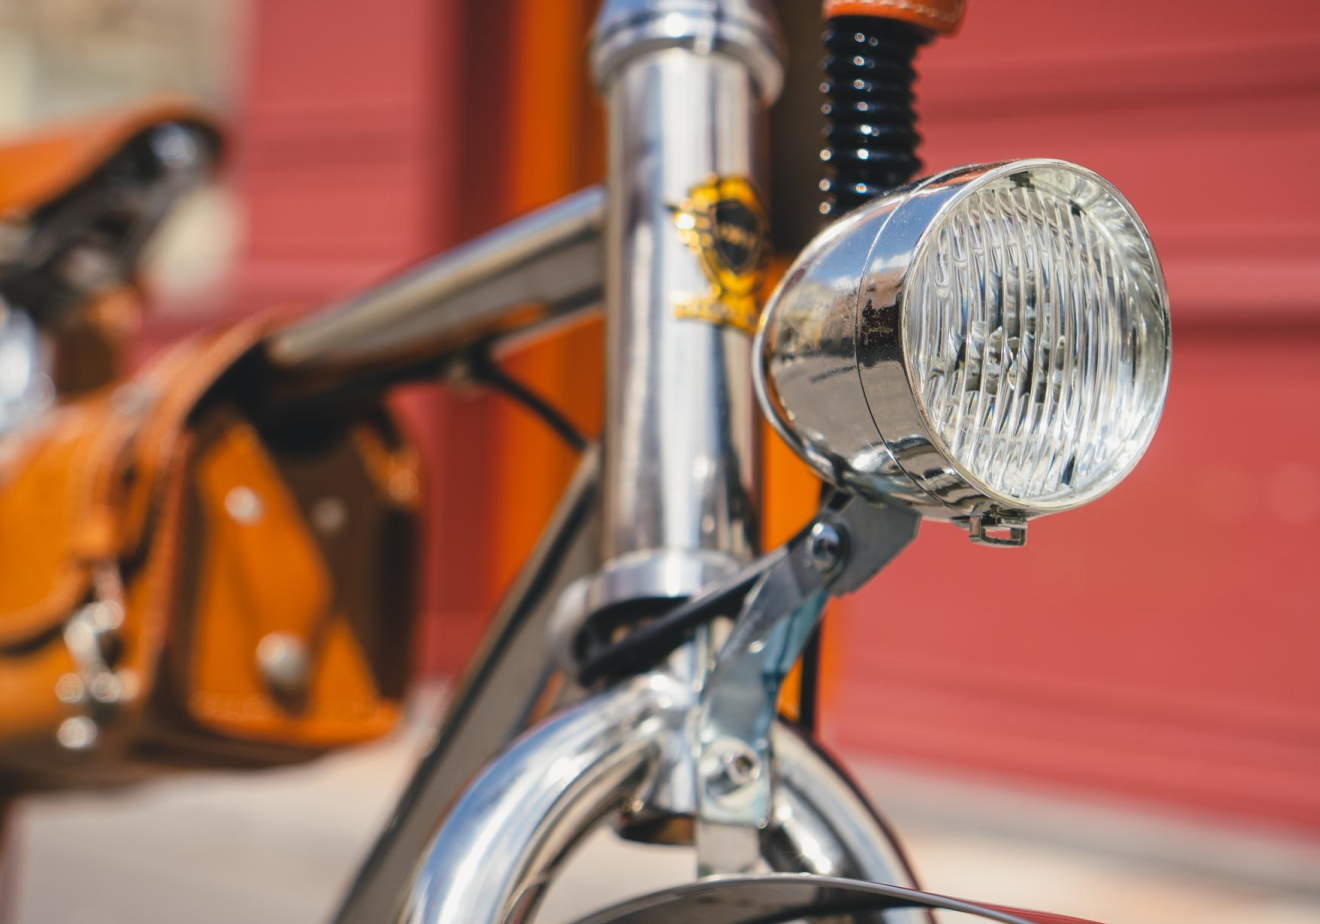 Bicicleta eléctrica Vintage 500W Shaft Drive - DKY Bikes Online